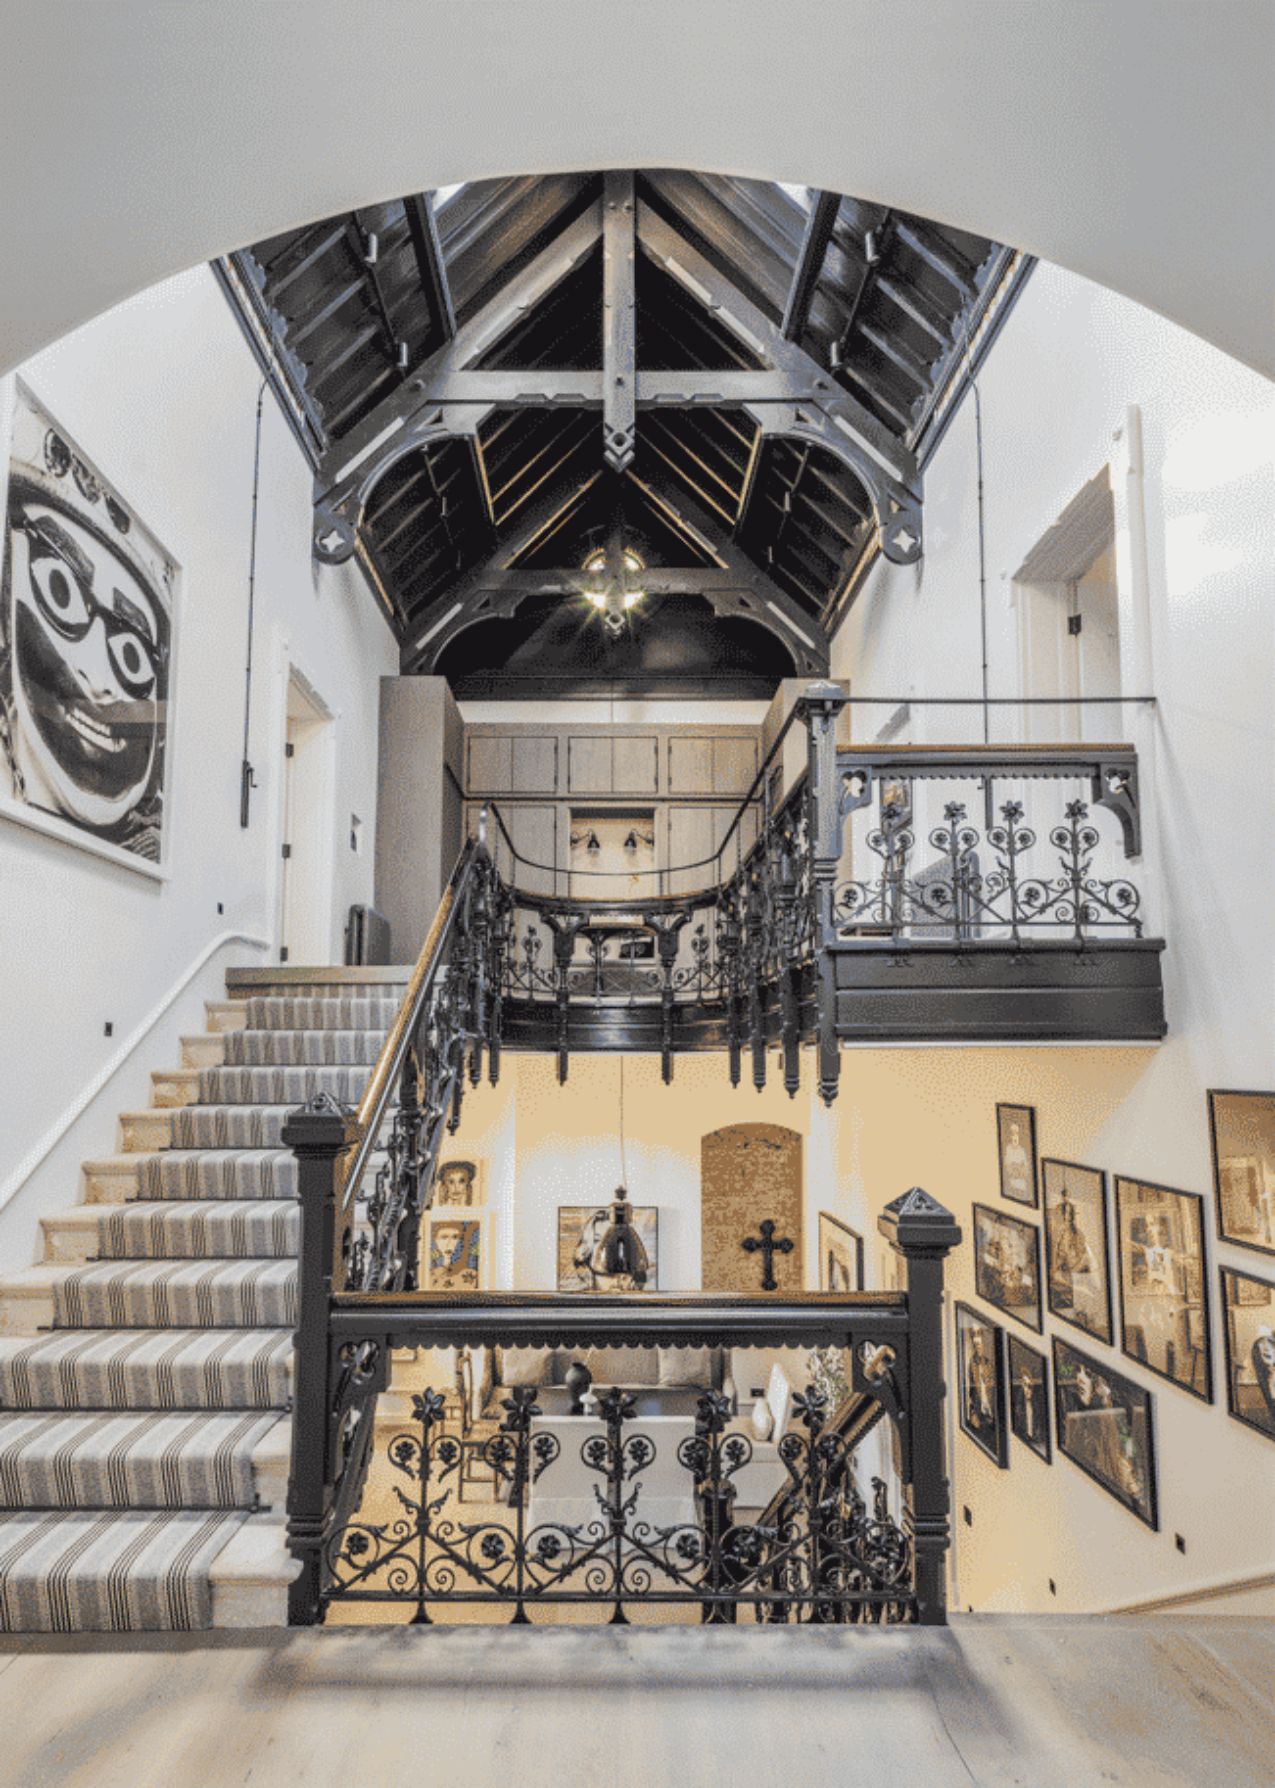 Boy George's London Home by Kelly Hoppen - Modern Neutrals and Striking Artwork (13)